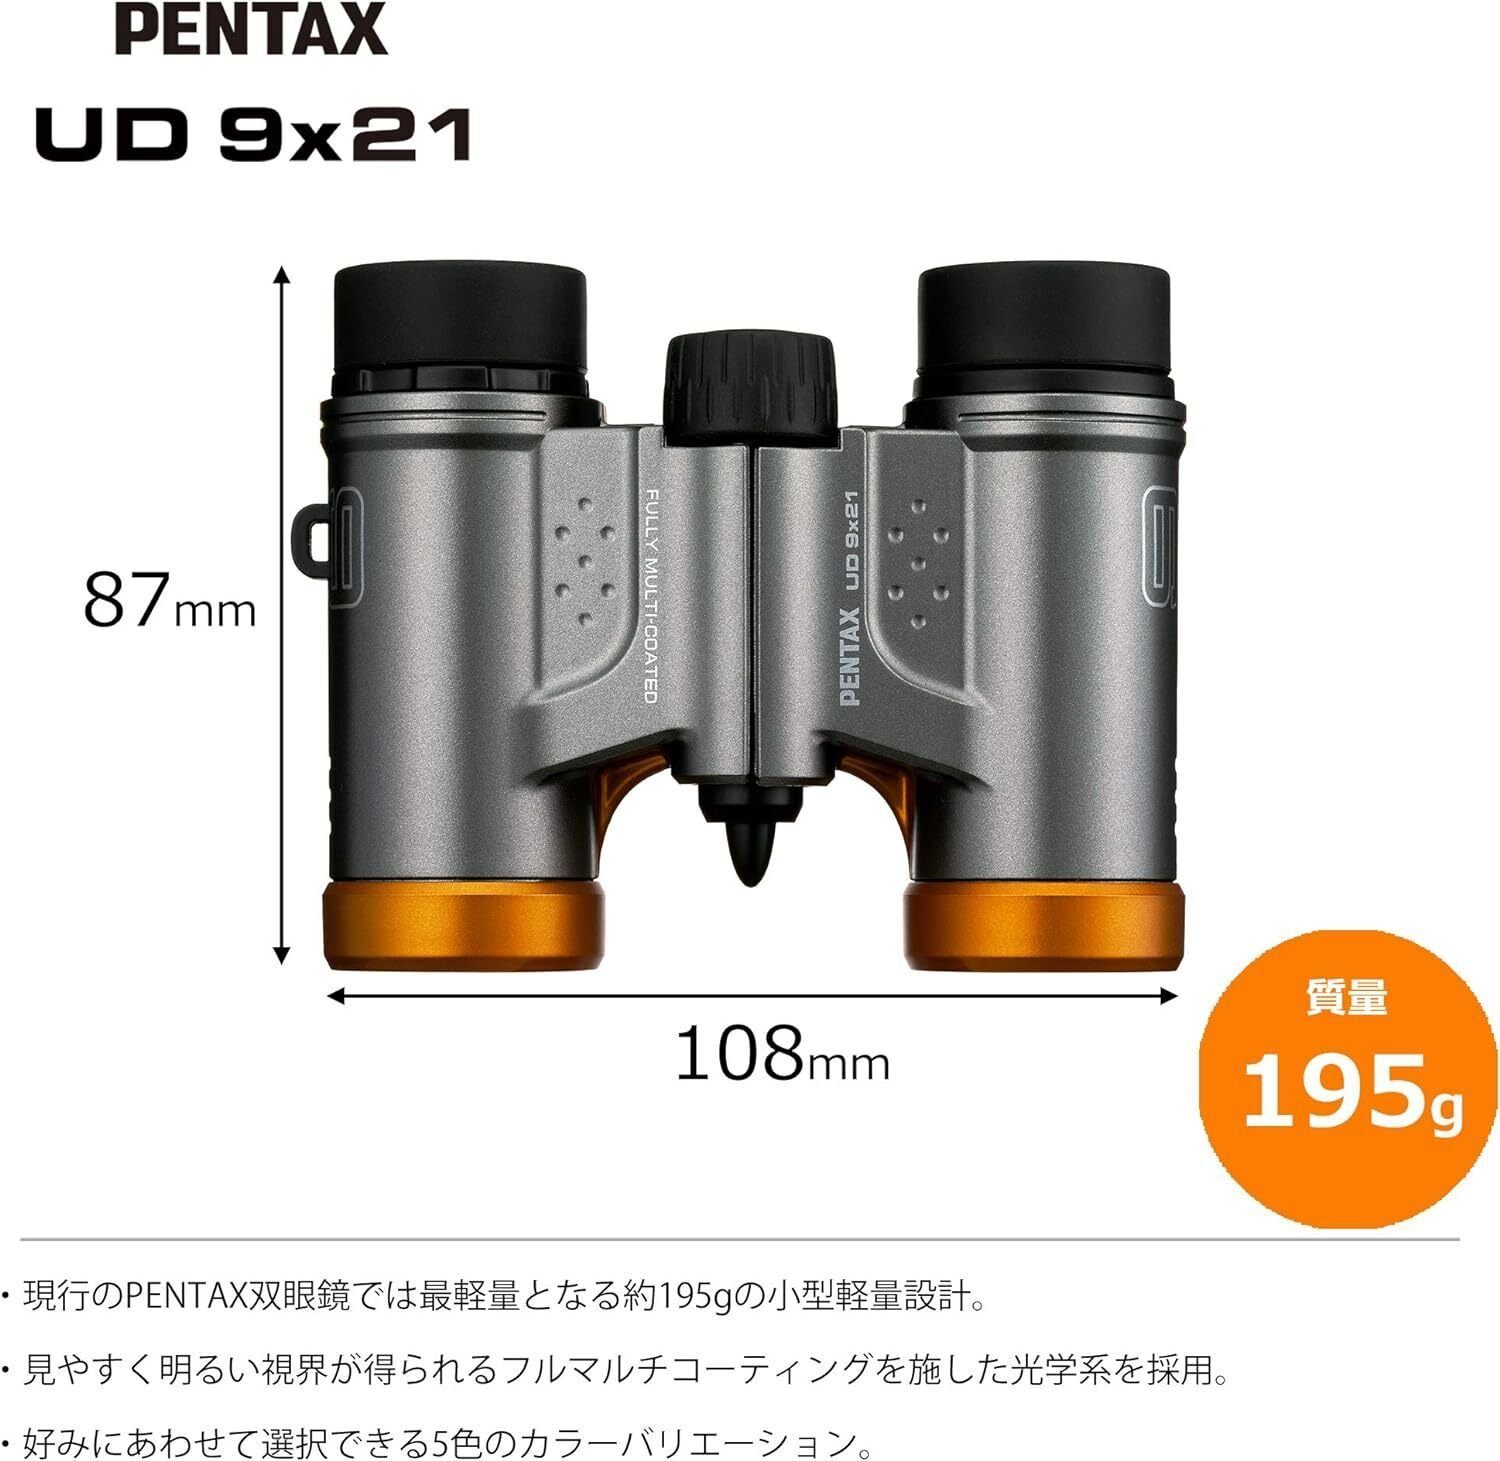 9x21 Pentax Fernglas Orange UD (Sport)